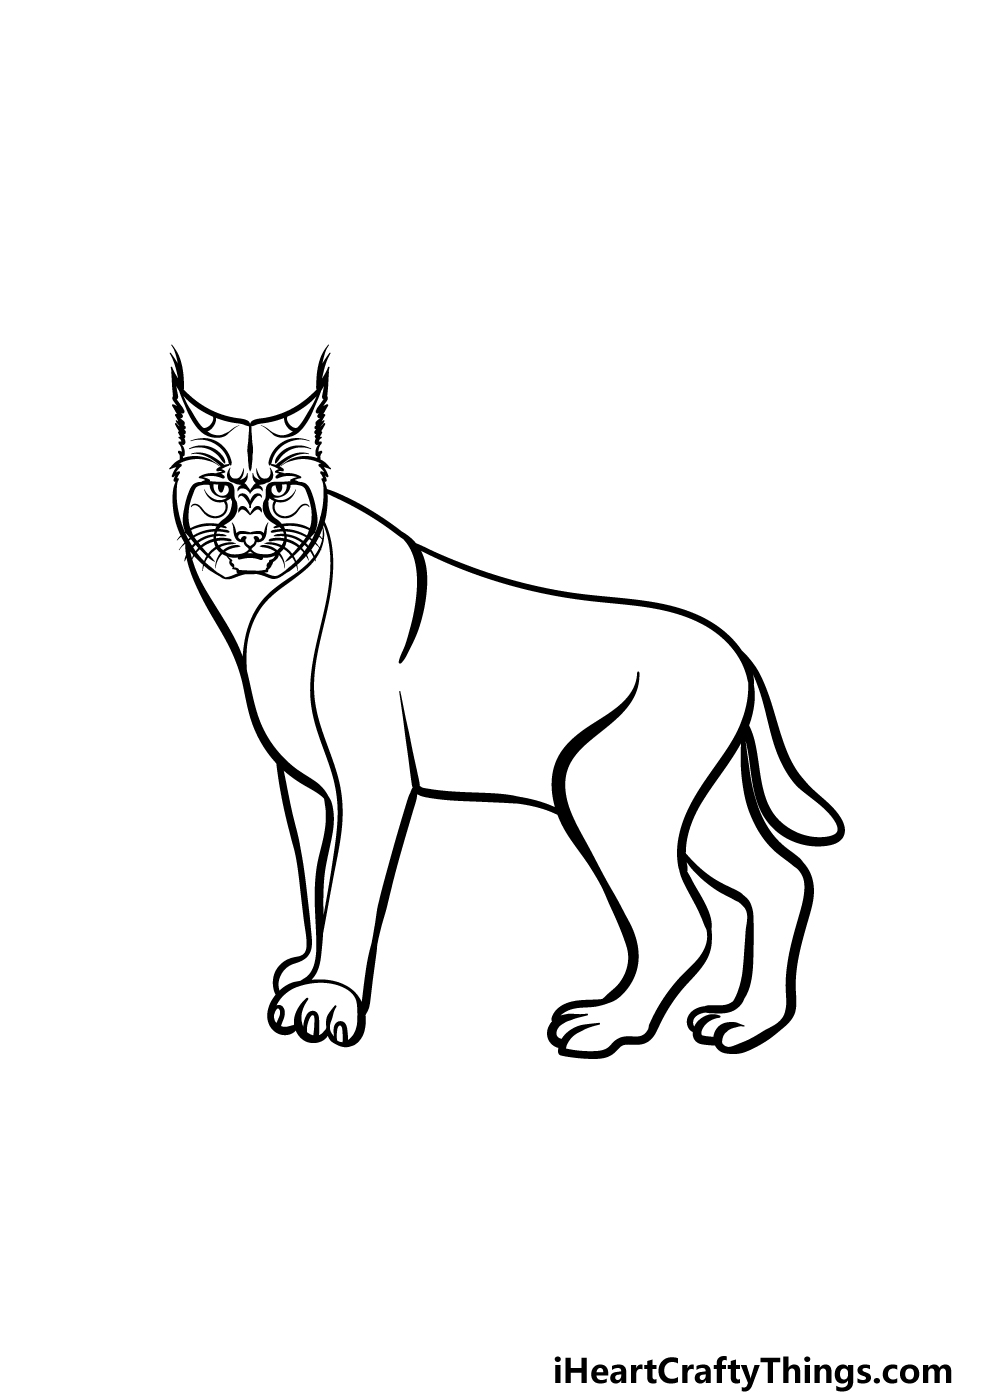 Bobcat drawing